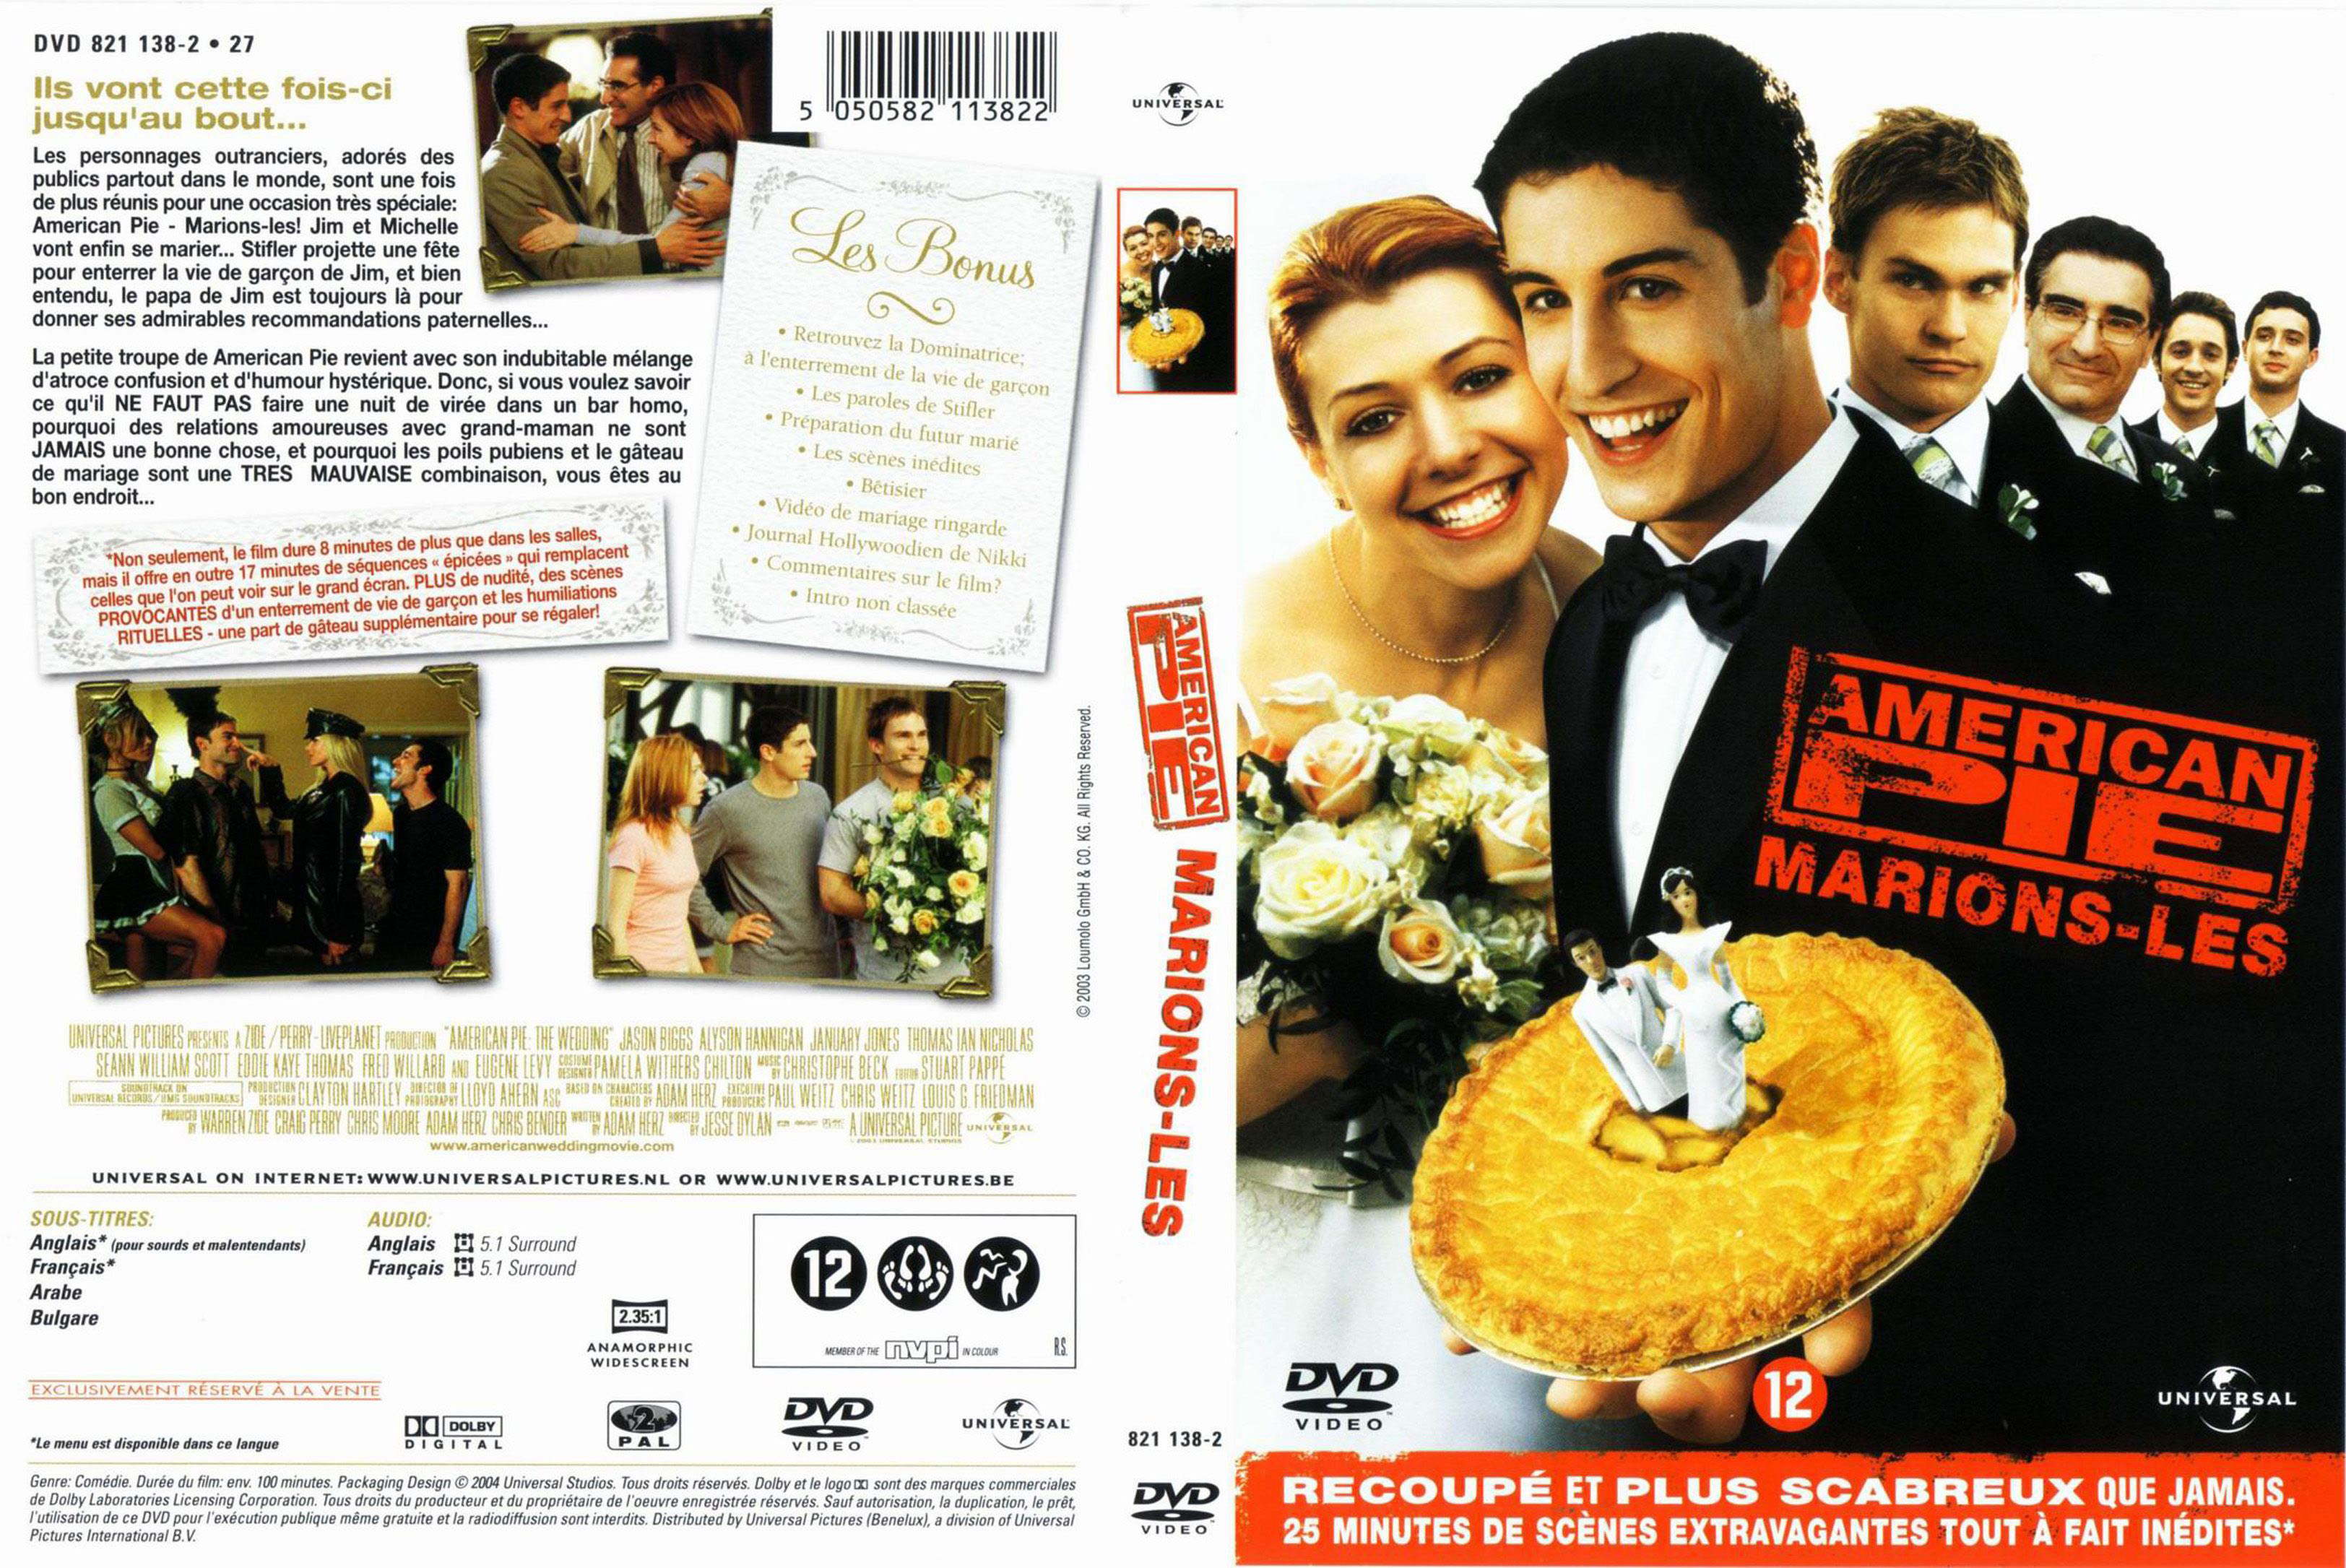 Jaquette DVD American Pie 3 v2